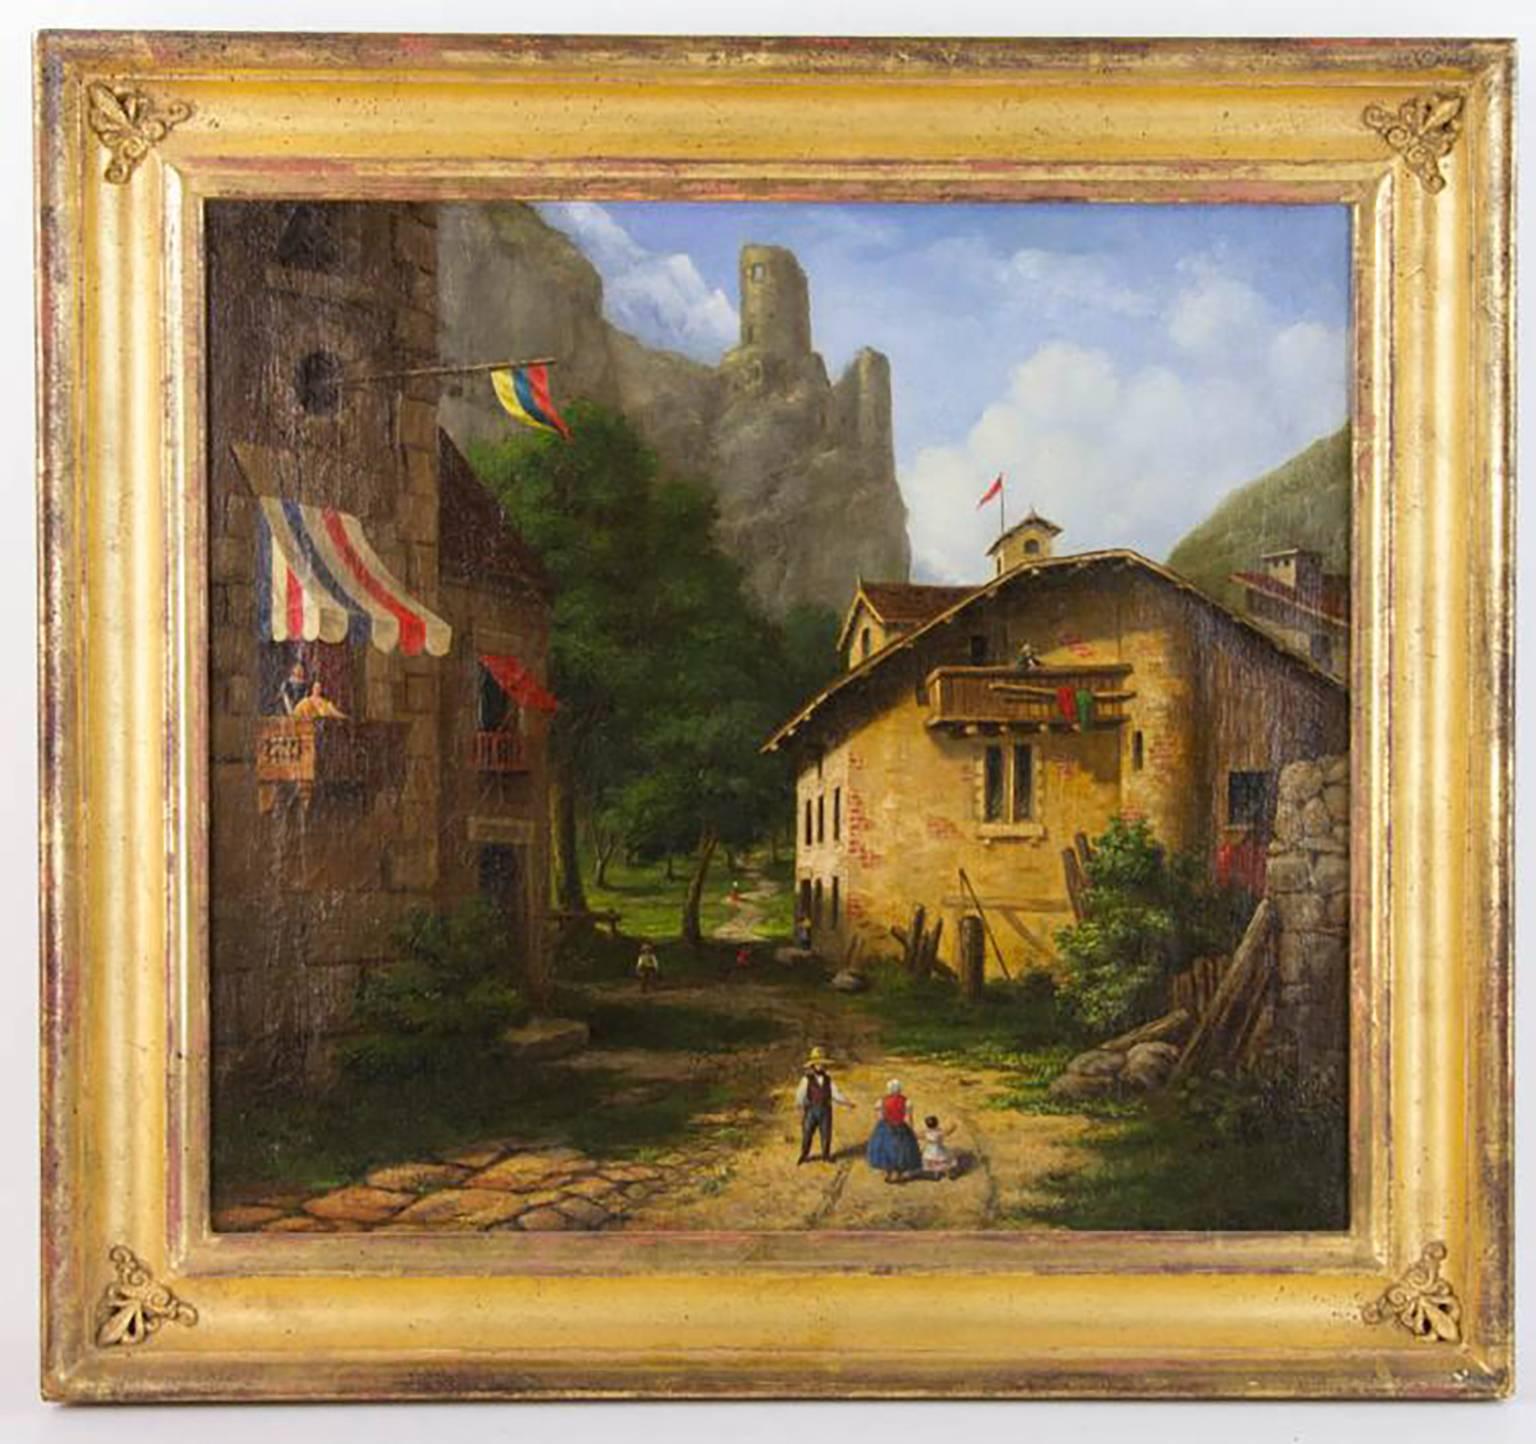 Samuel Kilburn Oil Painting Entitled “Armenian Village” – 1849 4